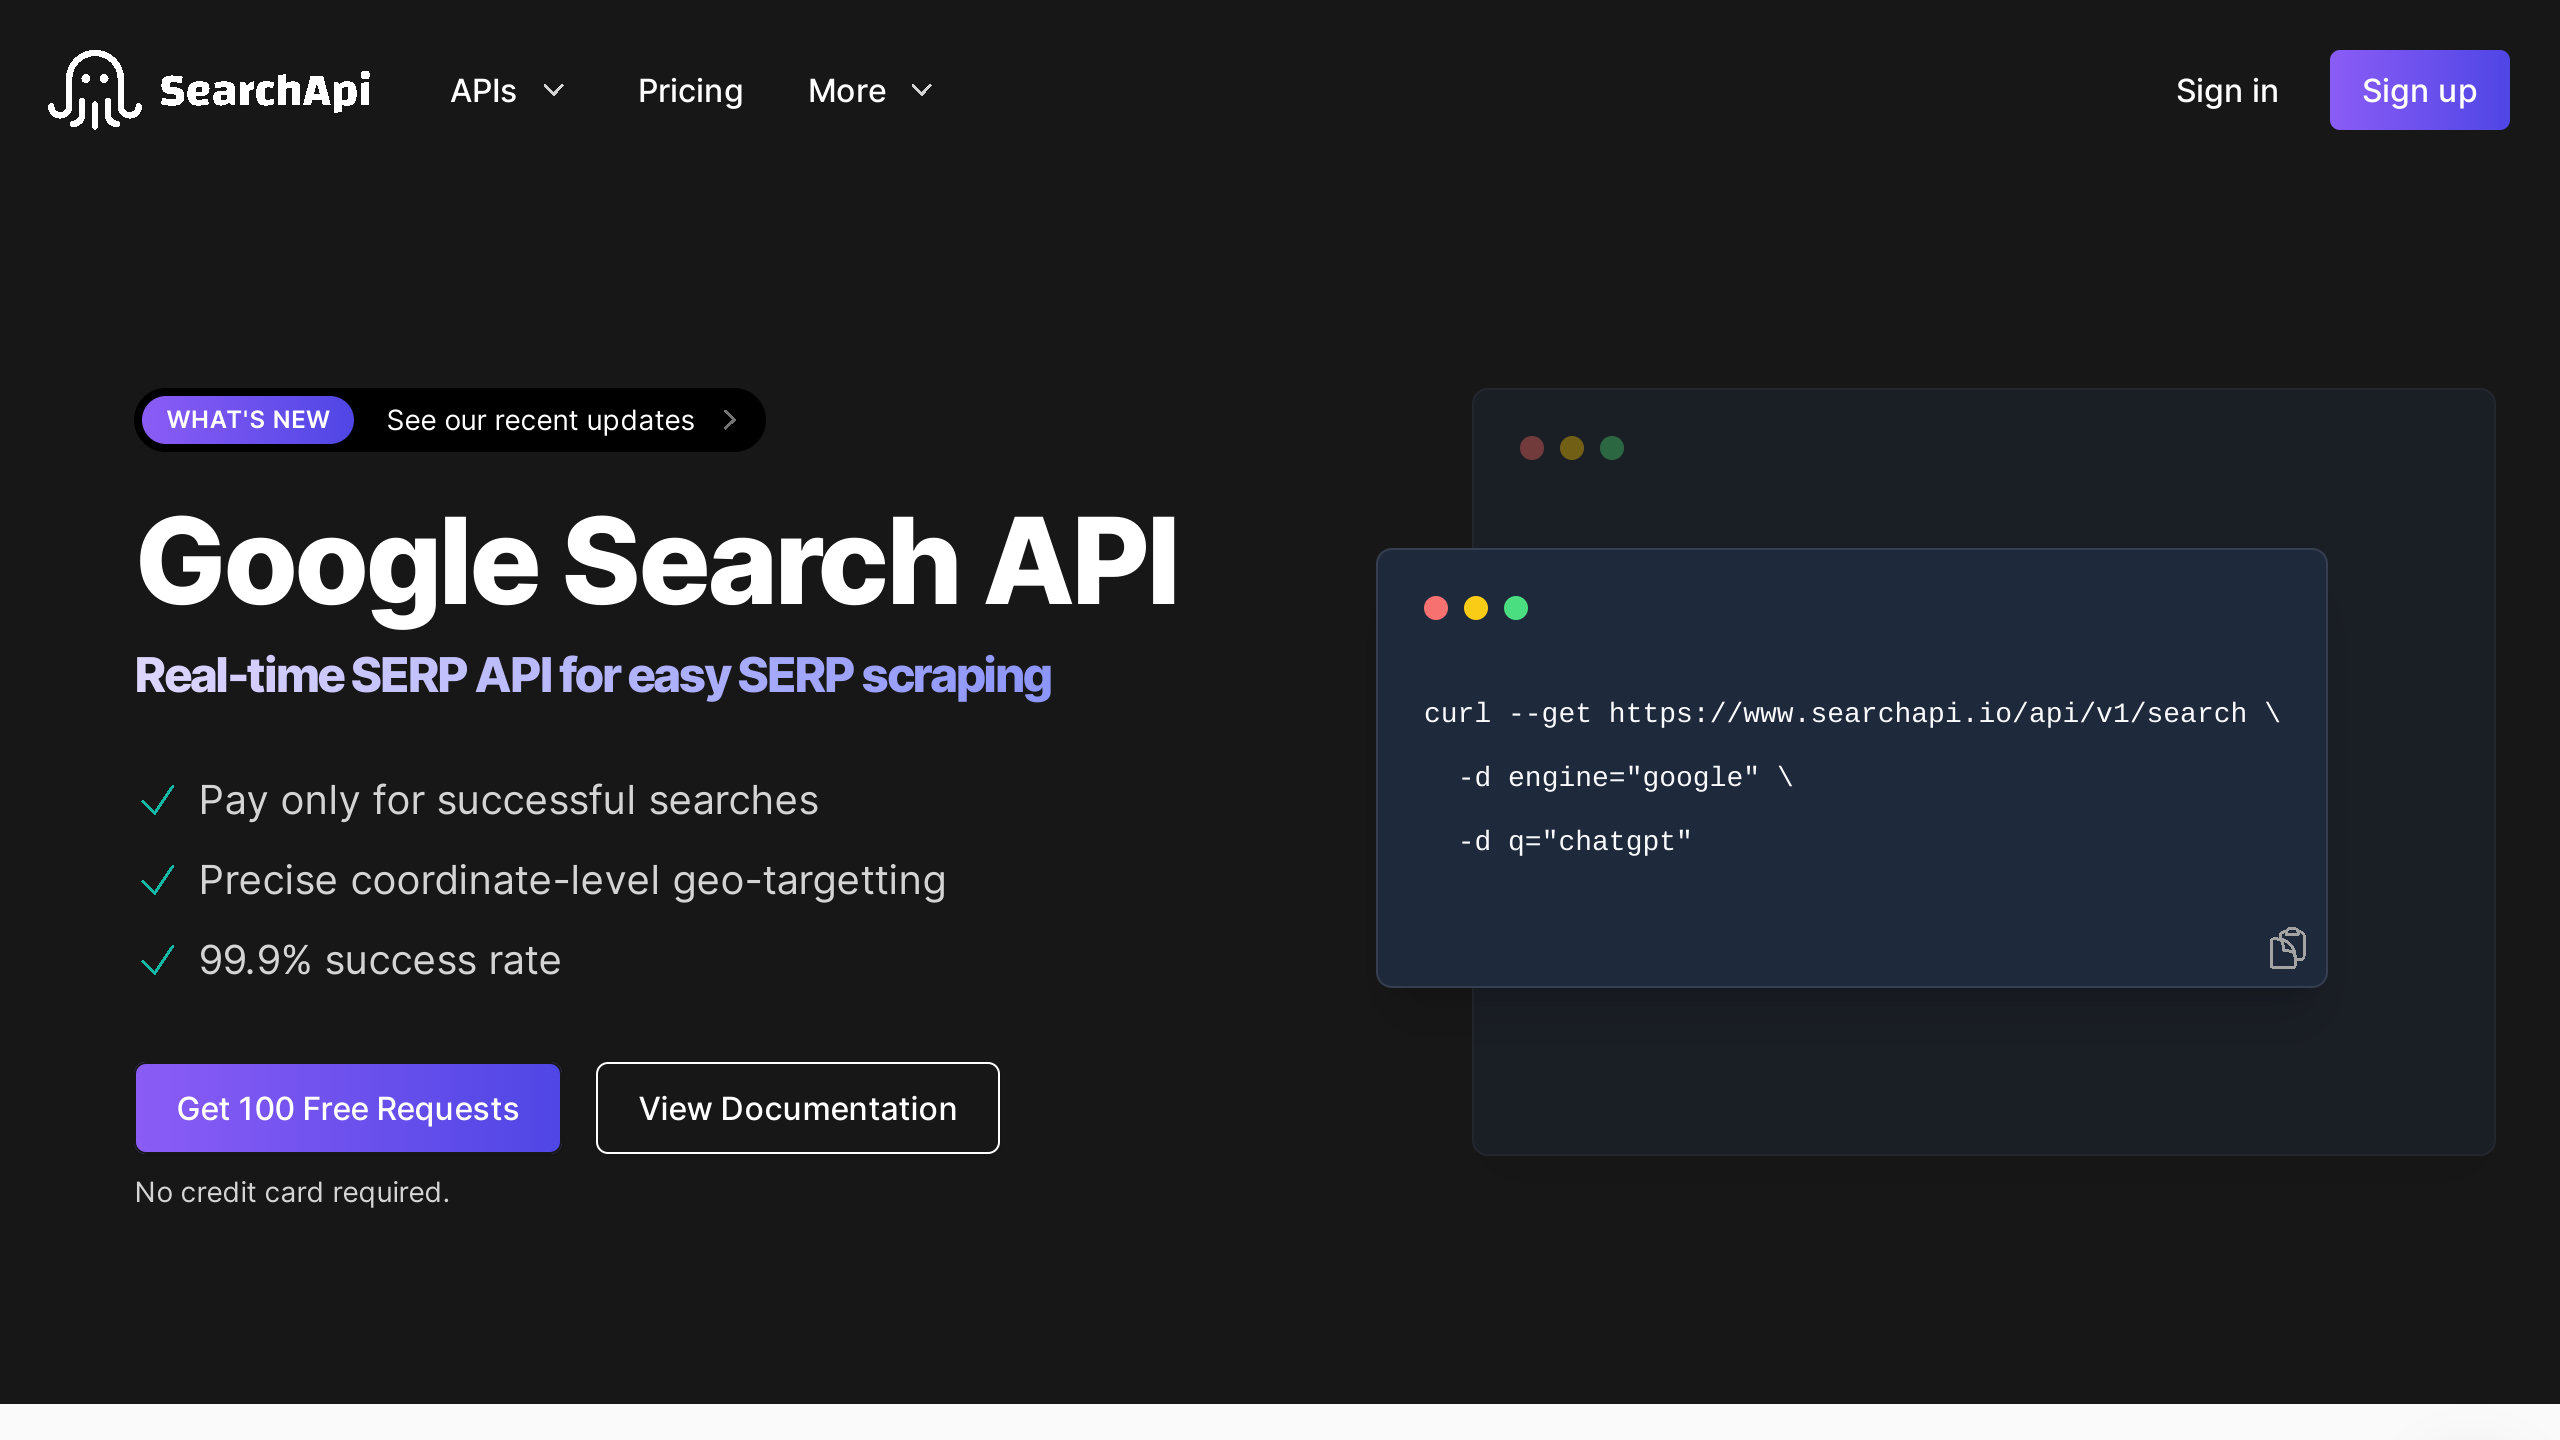 SearchApi's website screenshot